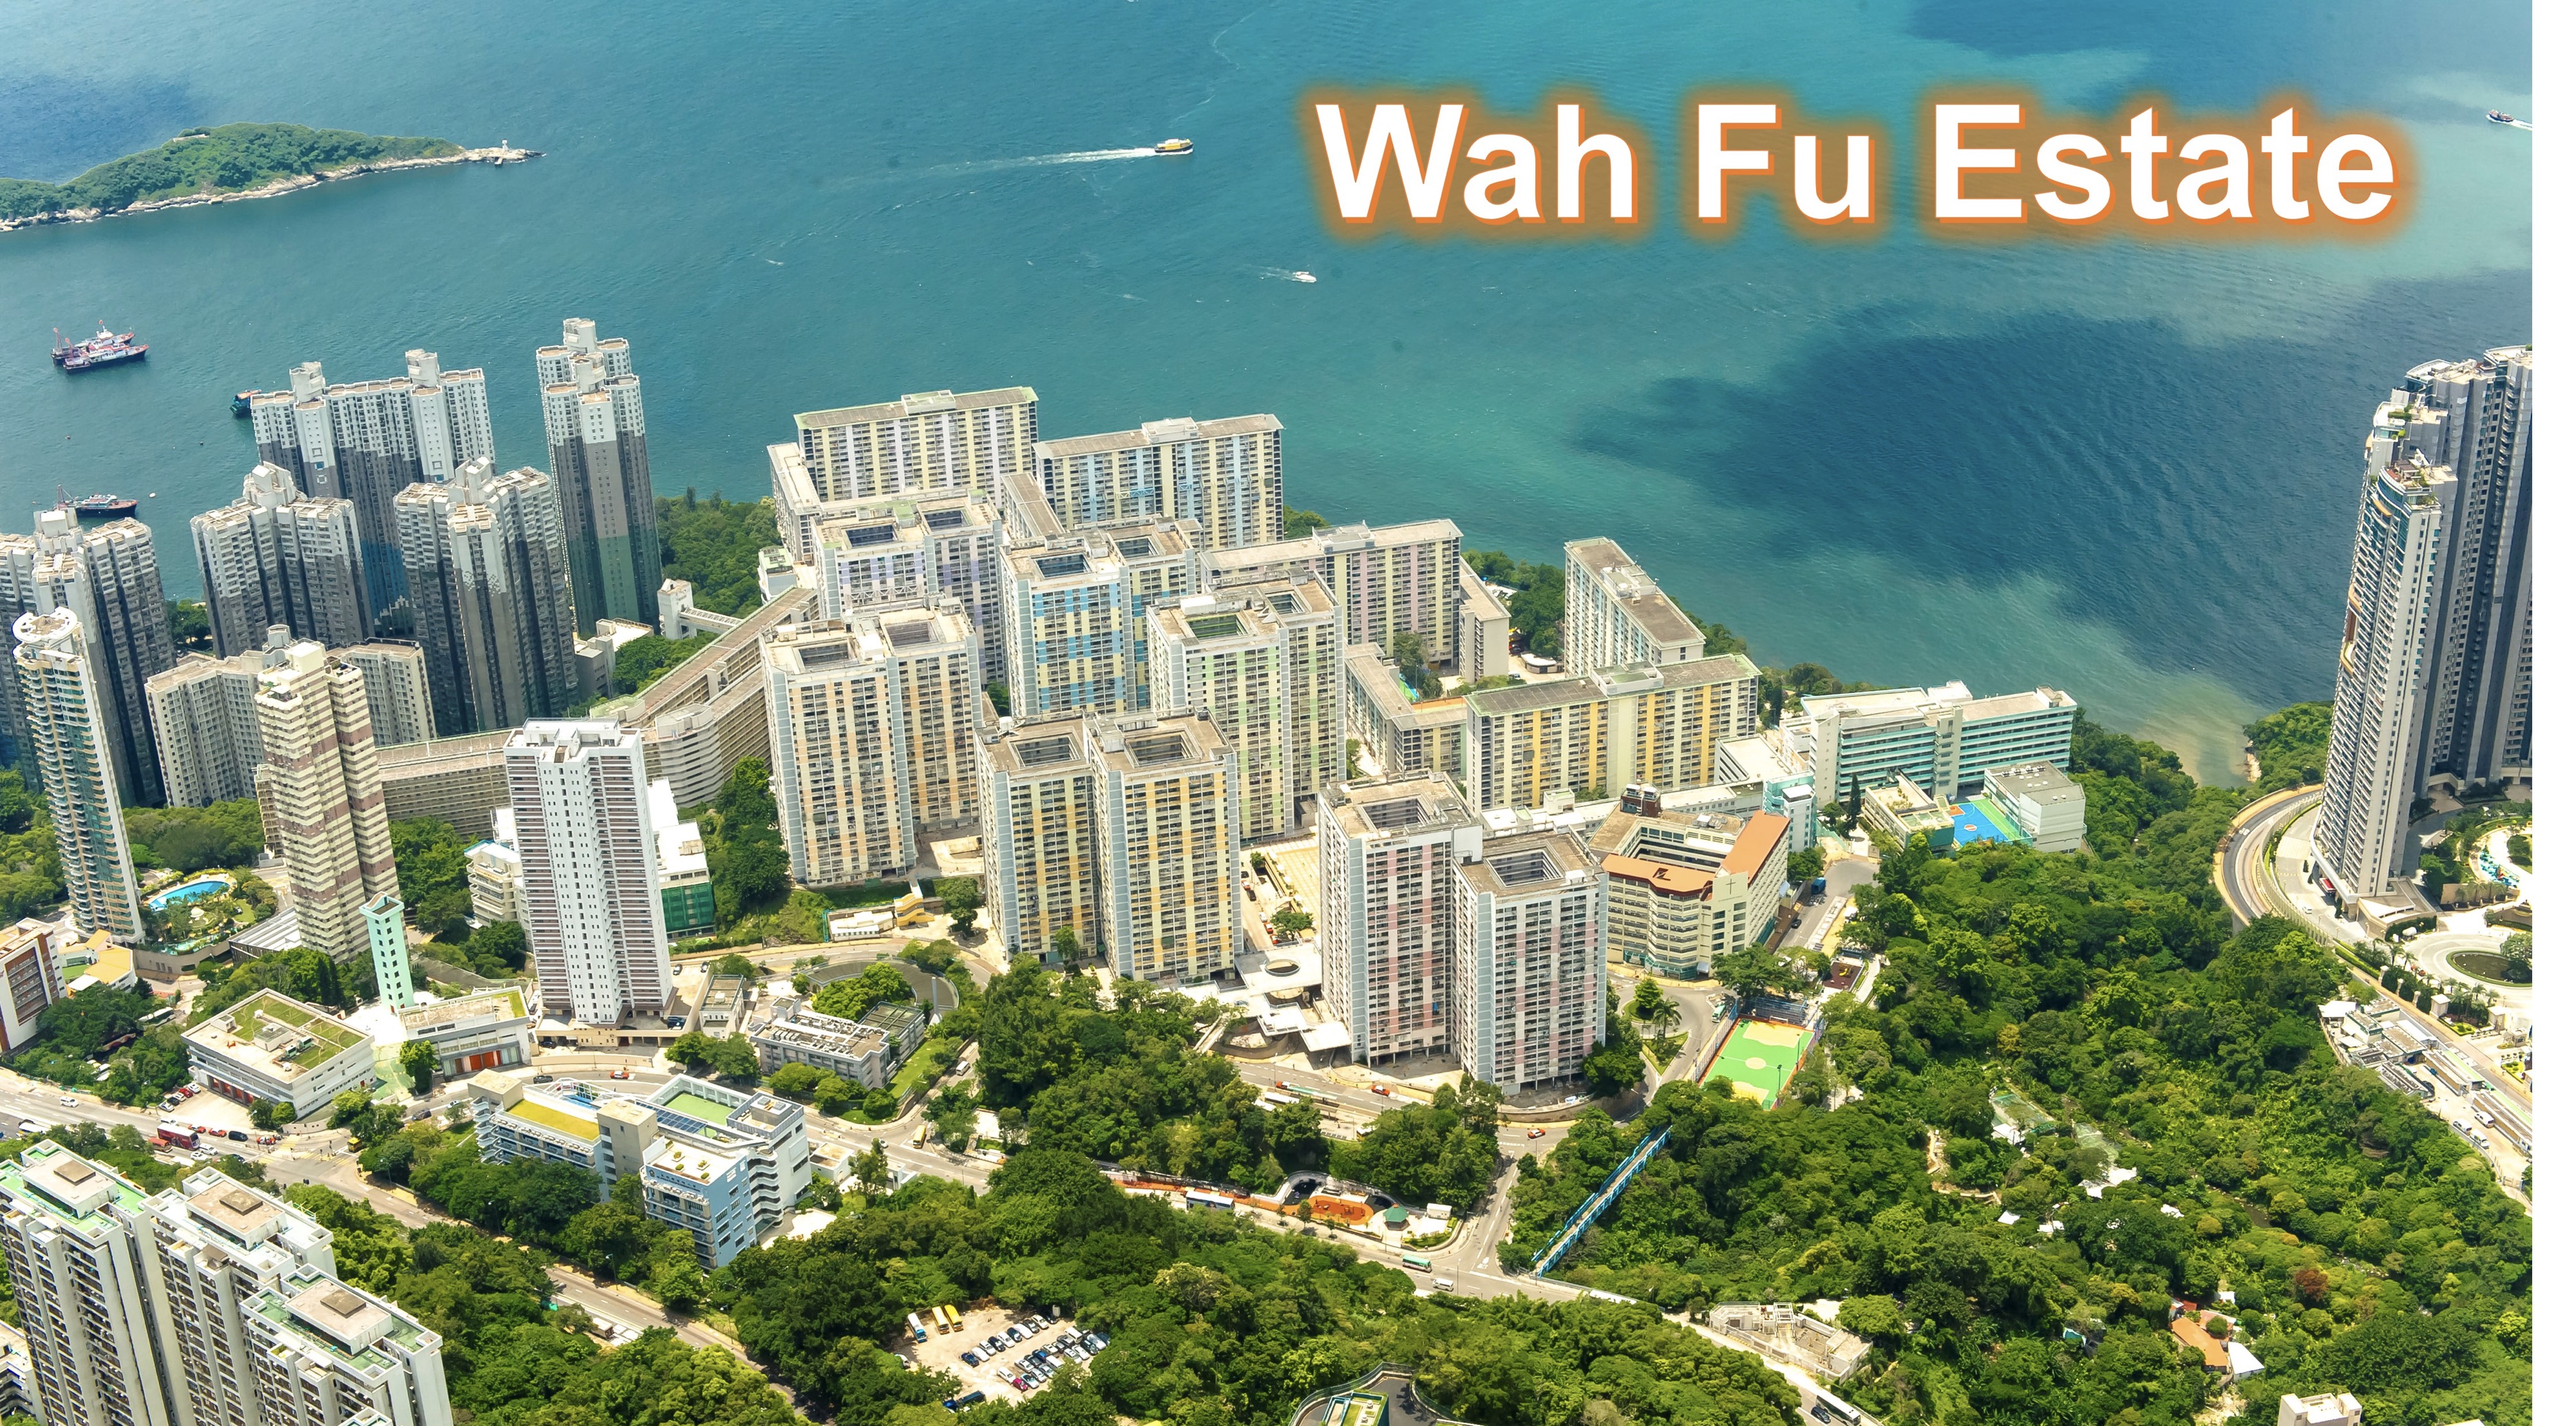 Wah Fu Estate